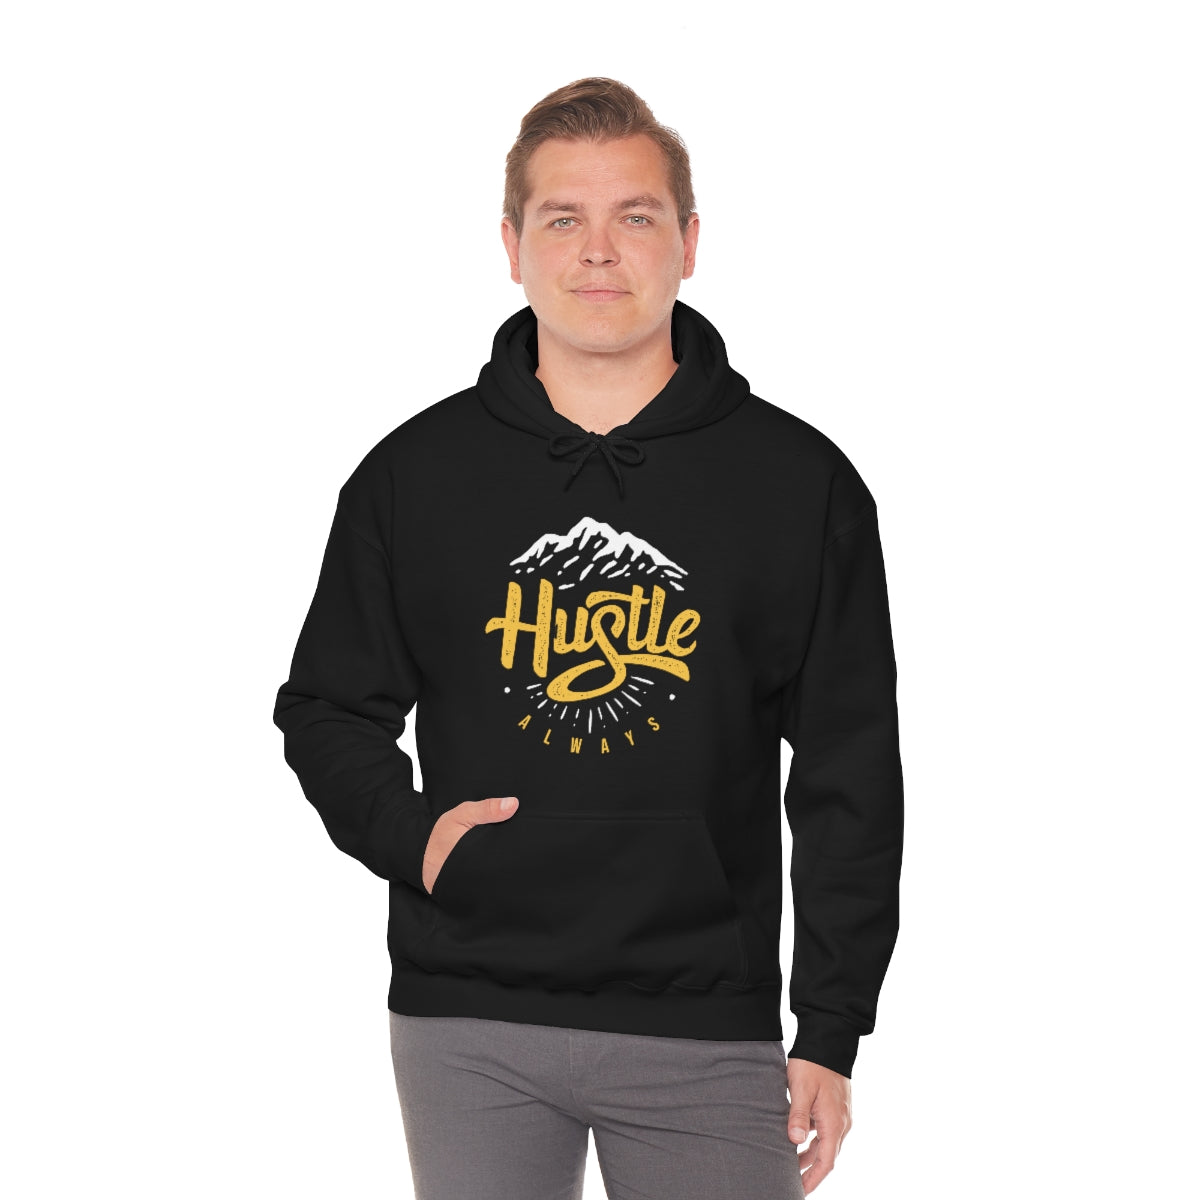 Always Hustle Hooded Sweatshirt